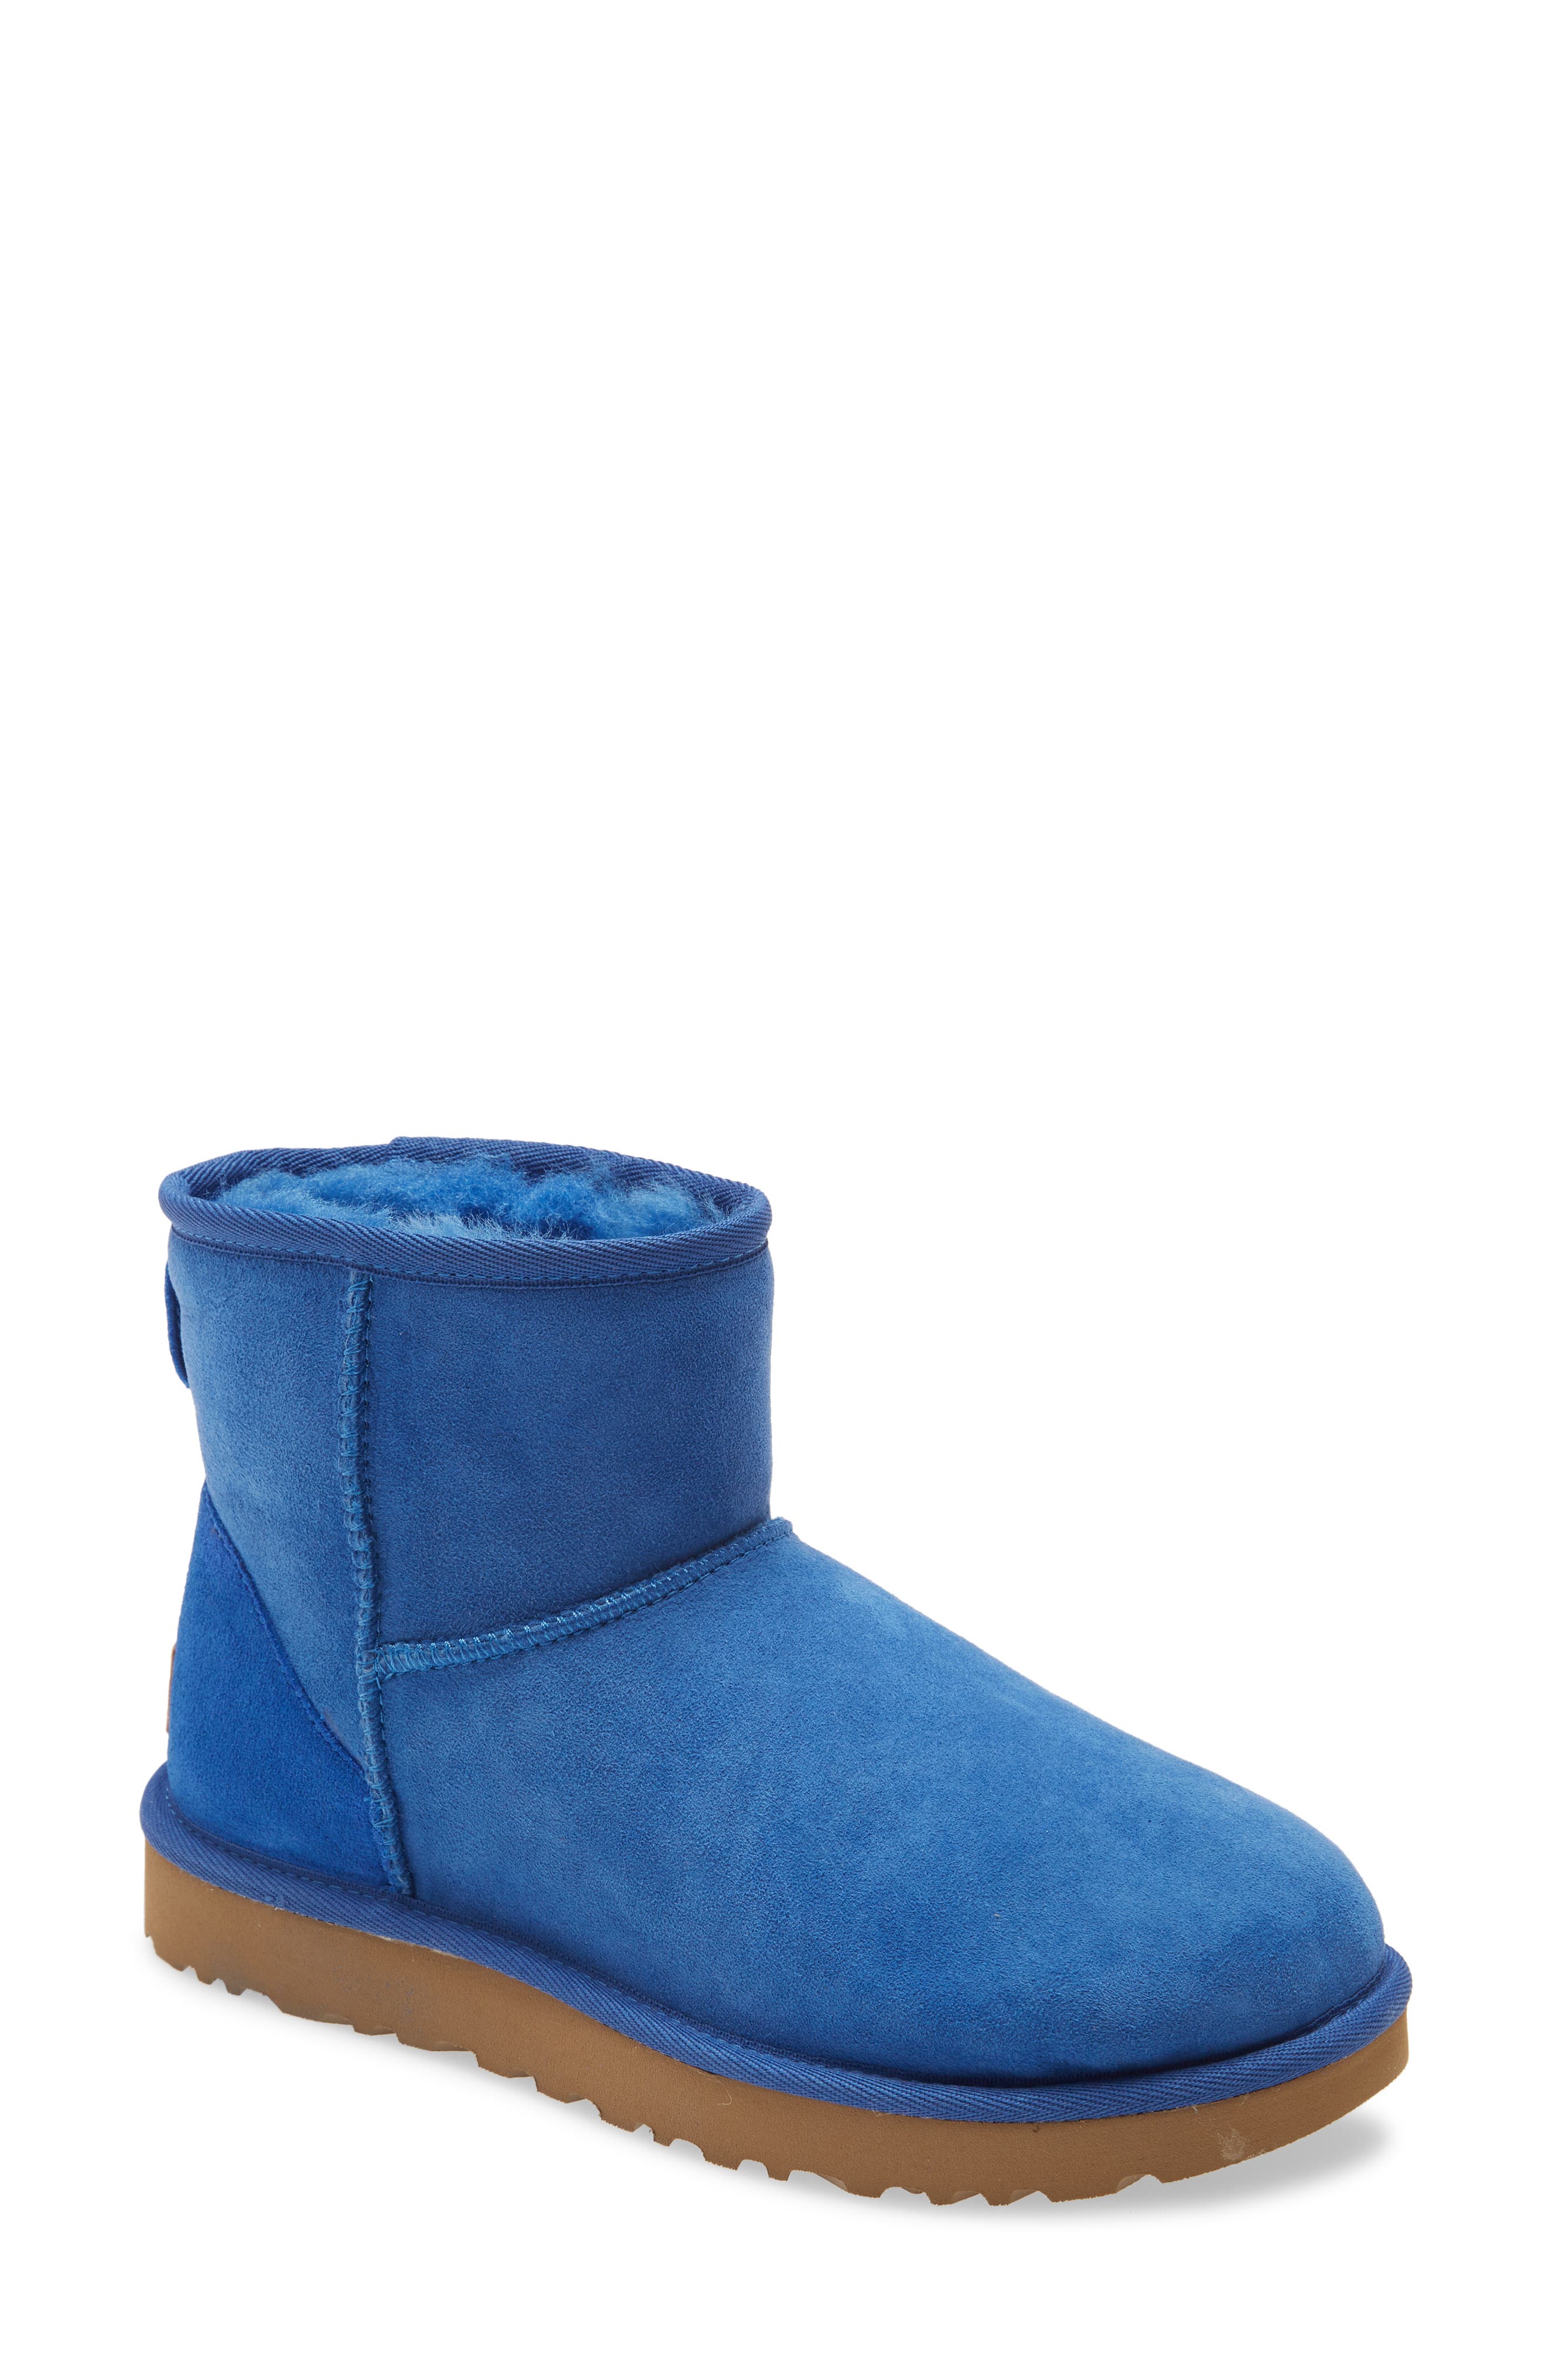 blue ugg boots womens